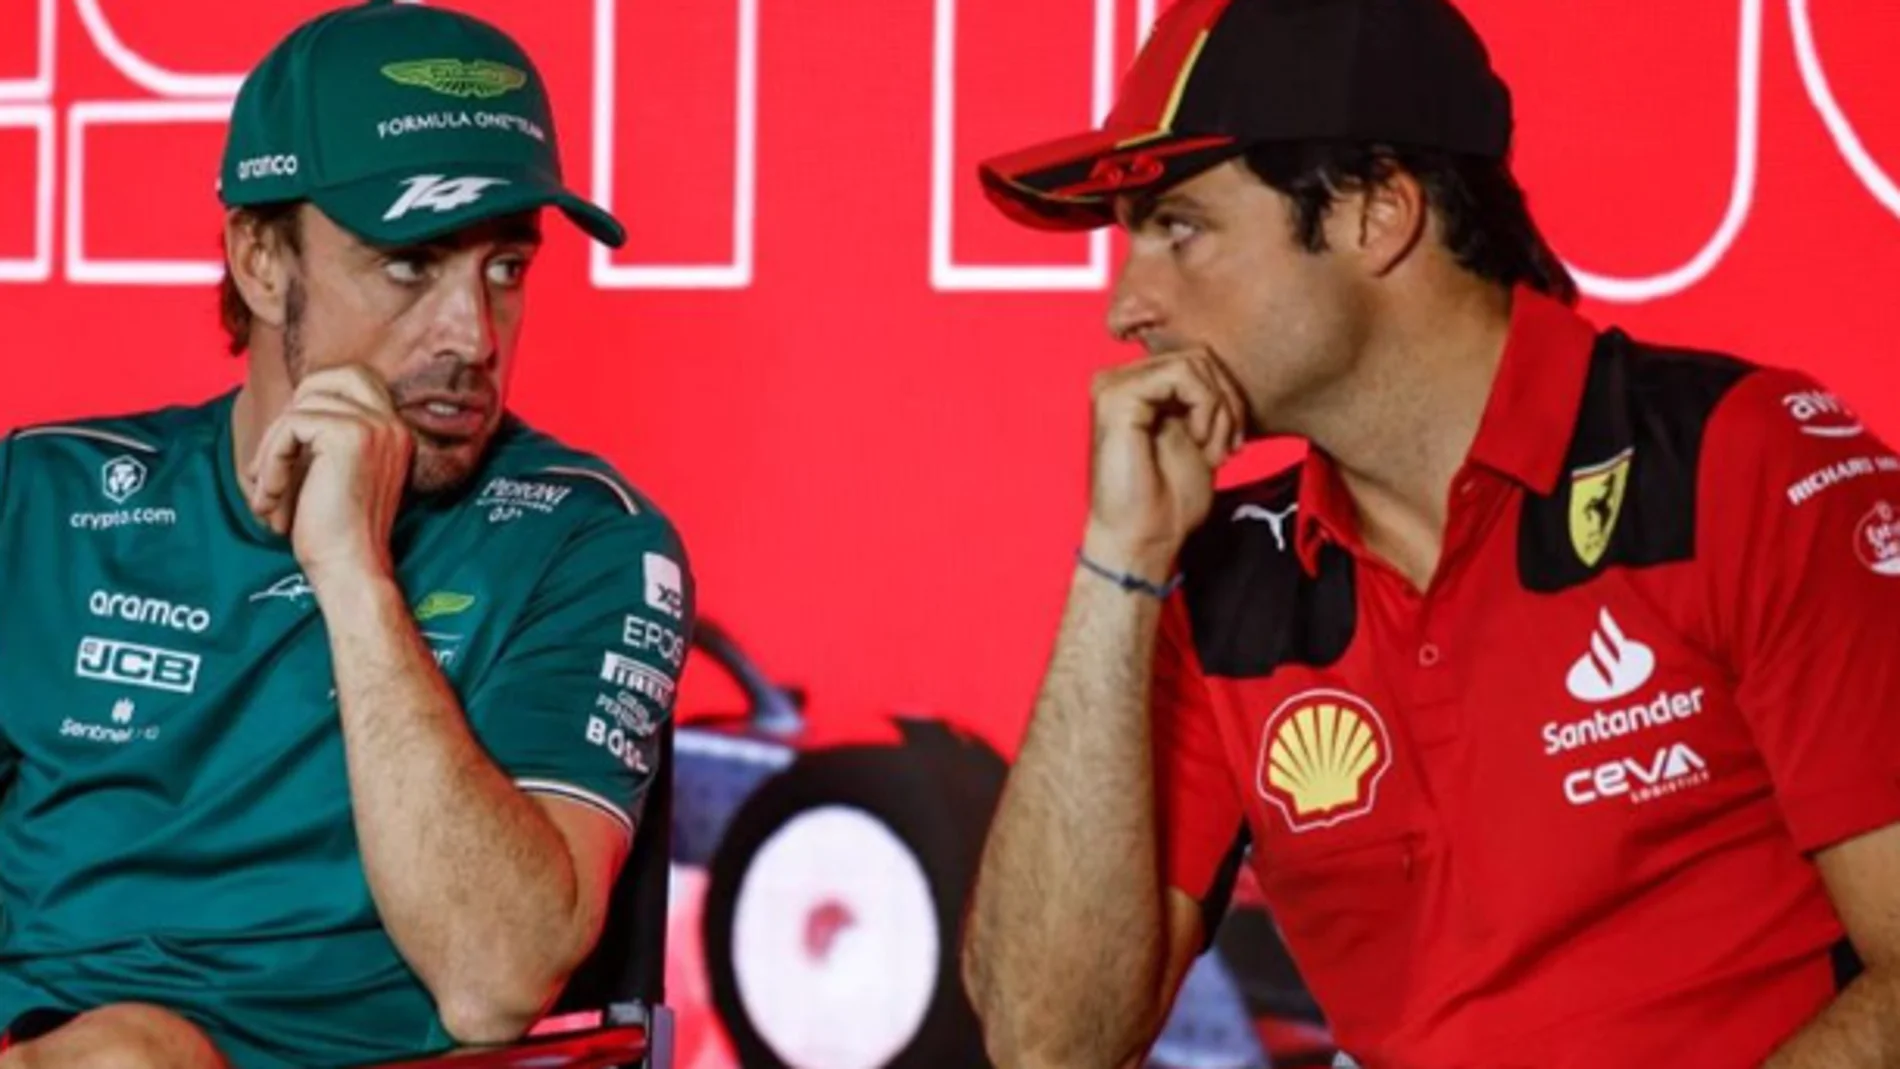 Fernando Alonso ningunea a Ferrari: "No me preocupa"